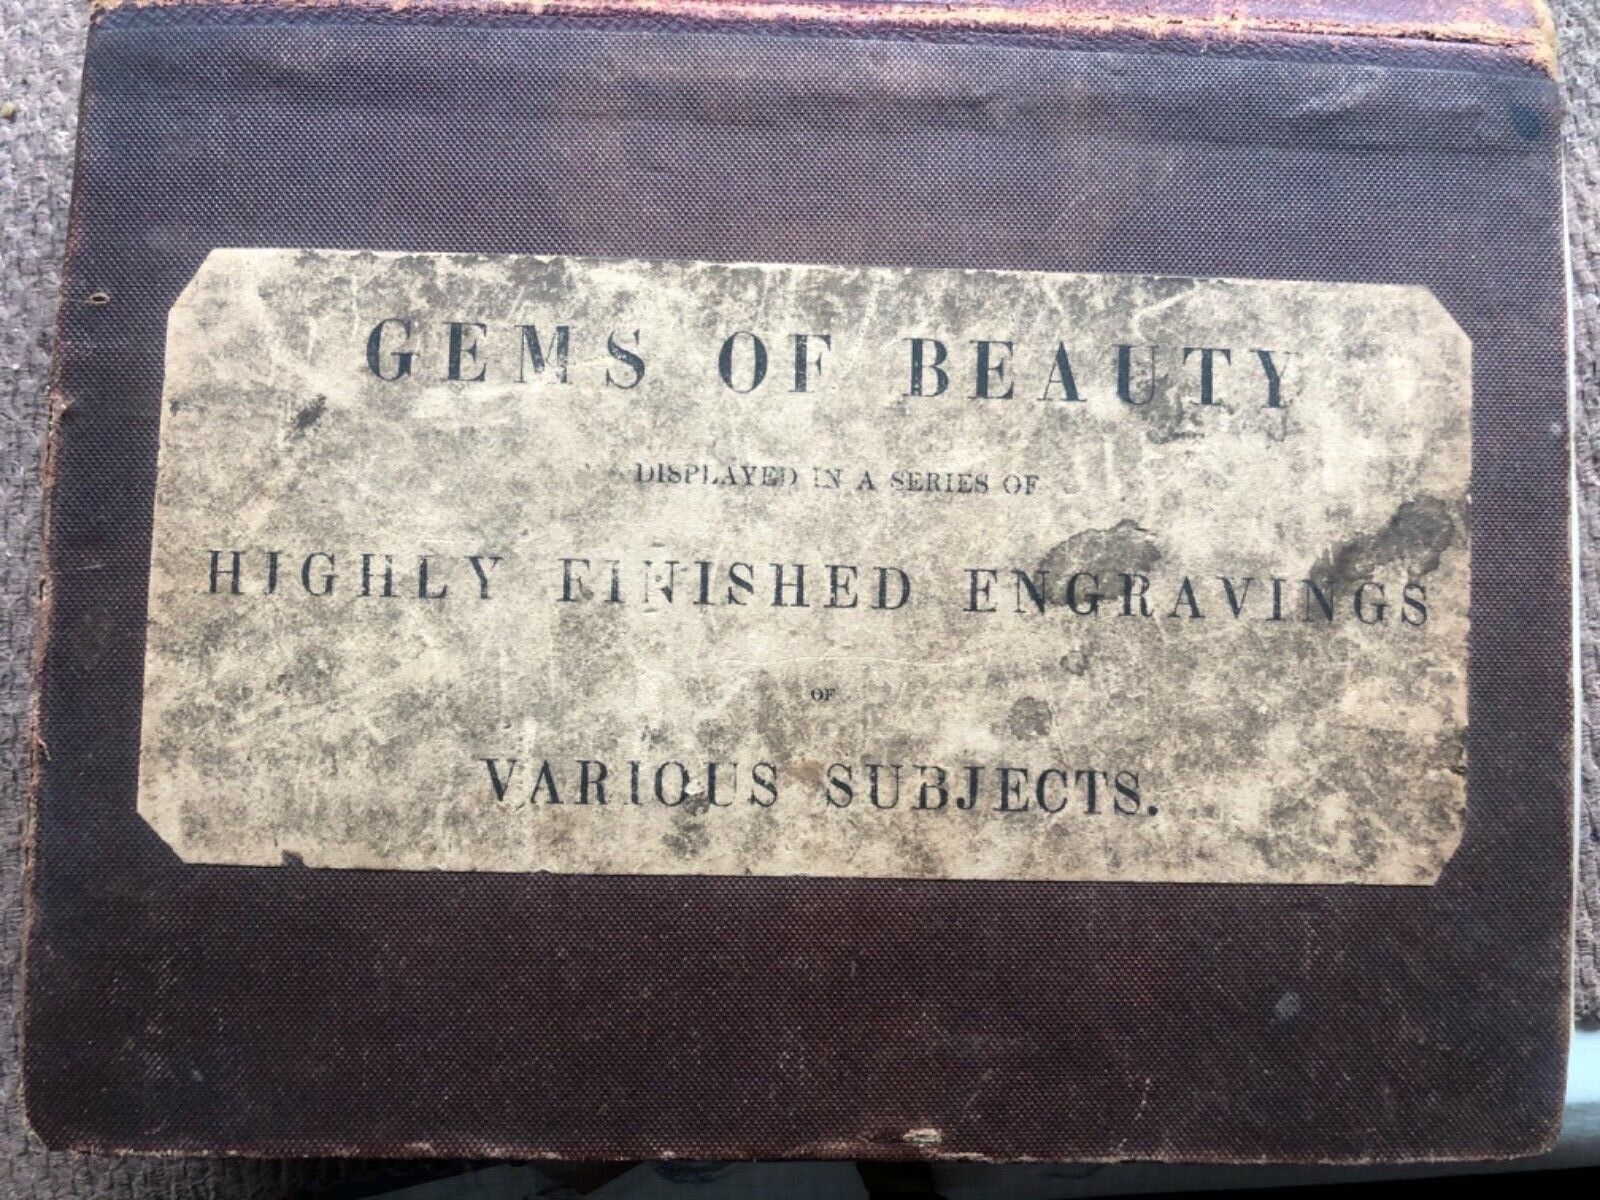 Antique Hogarth album, “Gems of Beauty”, 75 x Hogarth engravings loose.1820/60